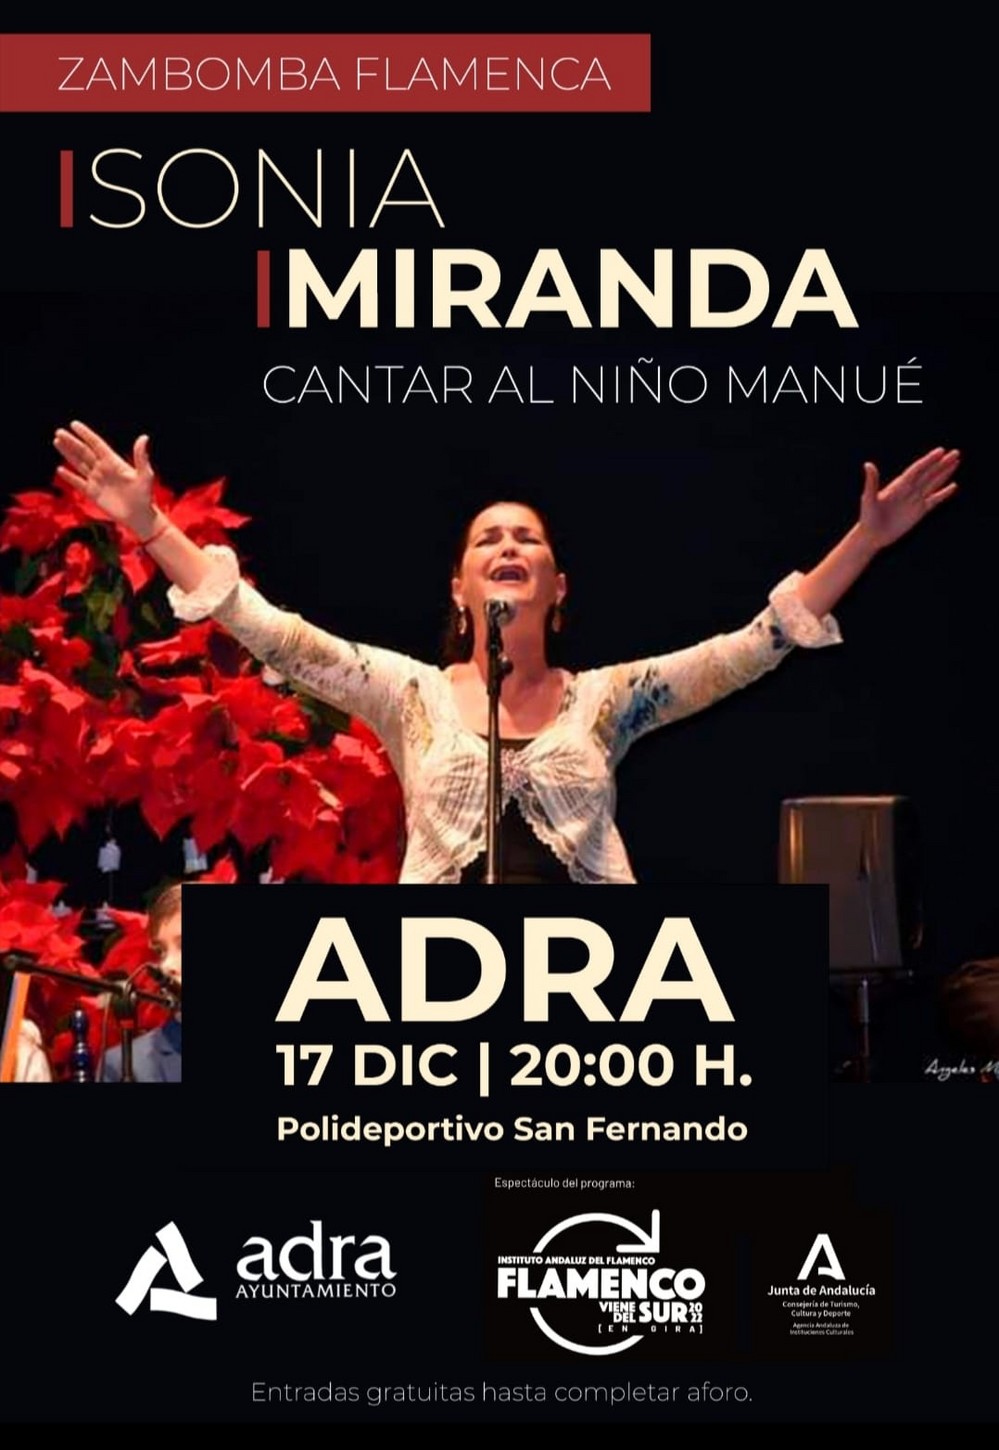 La zambomba de Sonia Miranda ‘Cantando al niño Manué’ llega a Adra el próximo 17 de diciembre